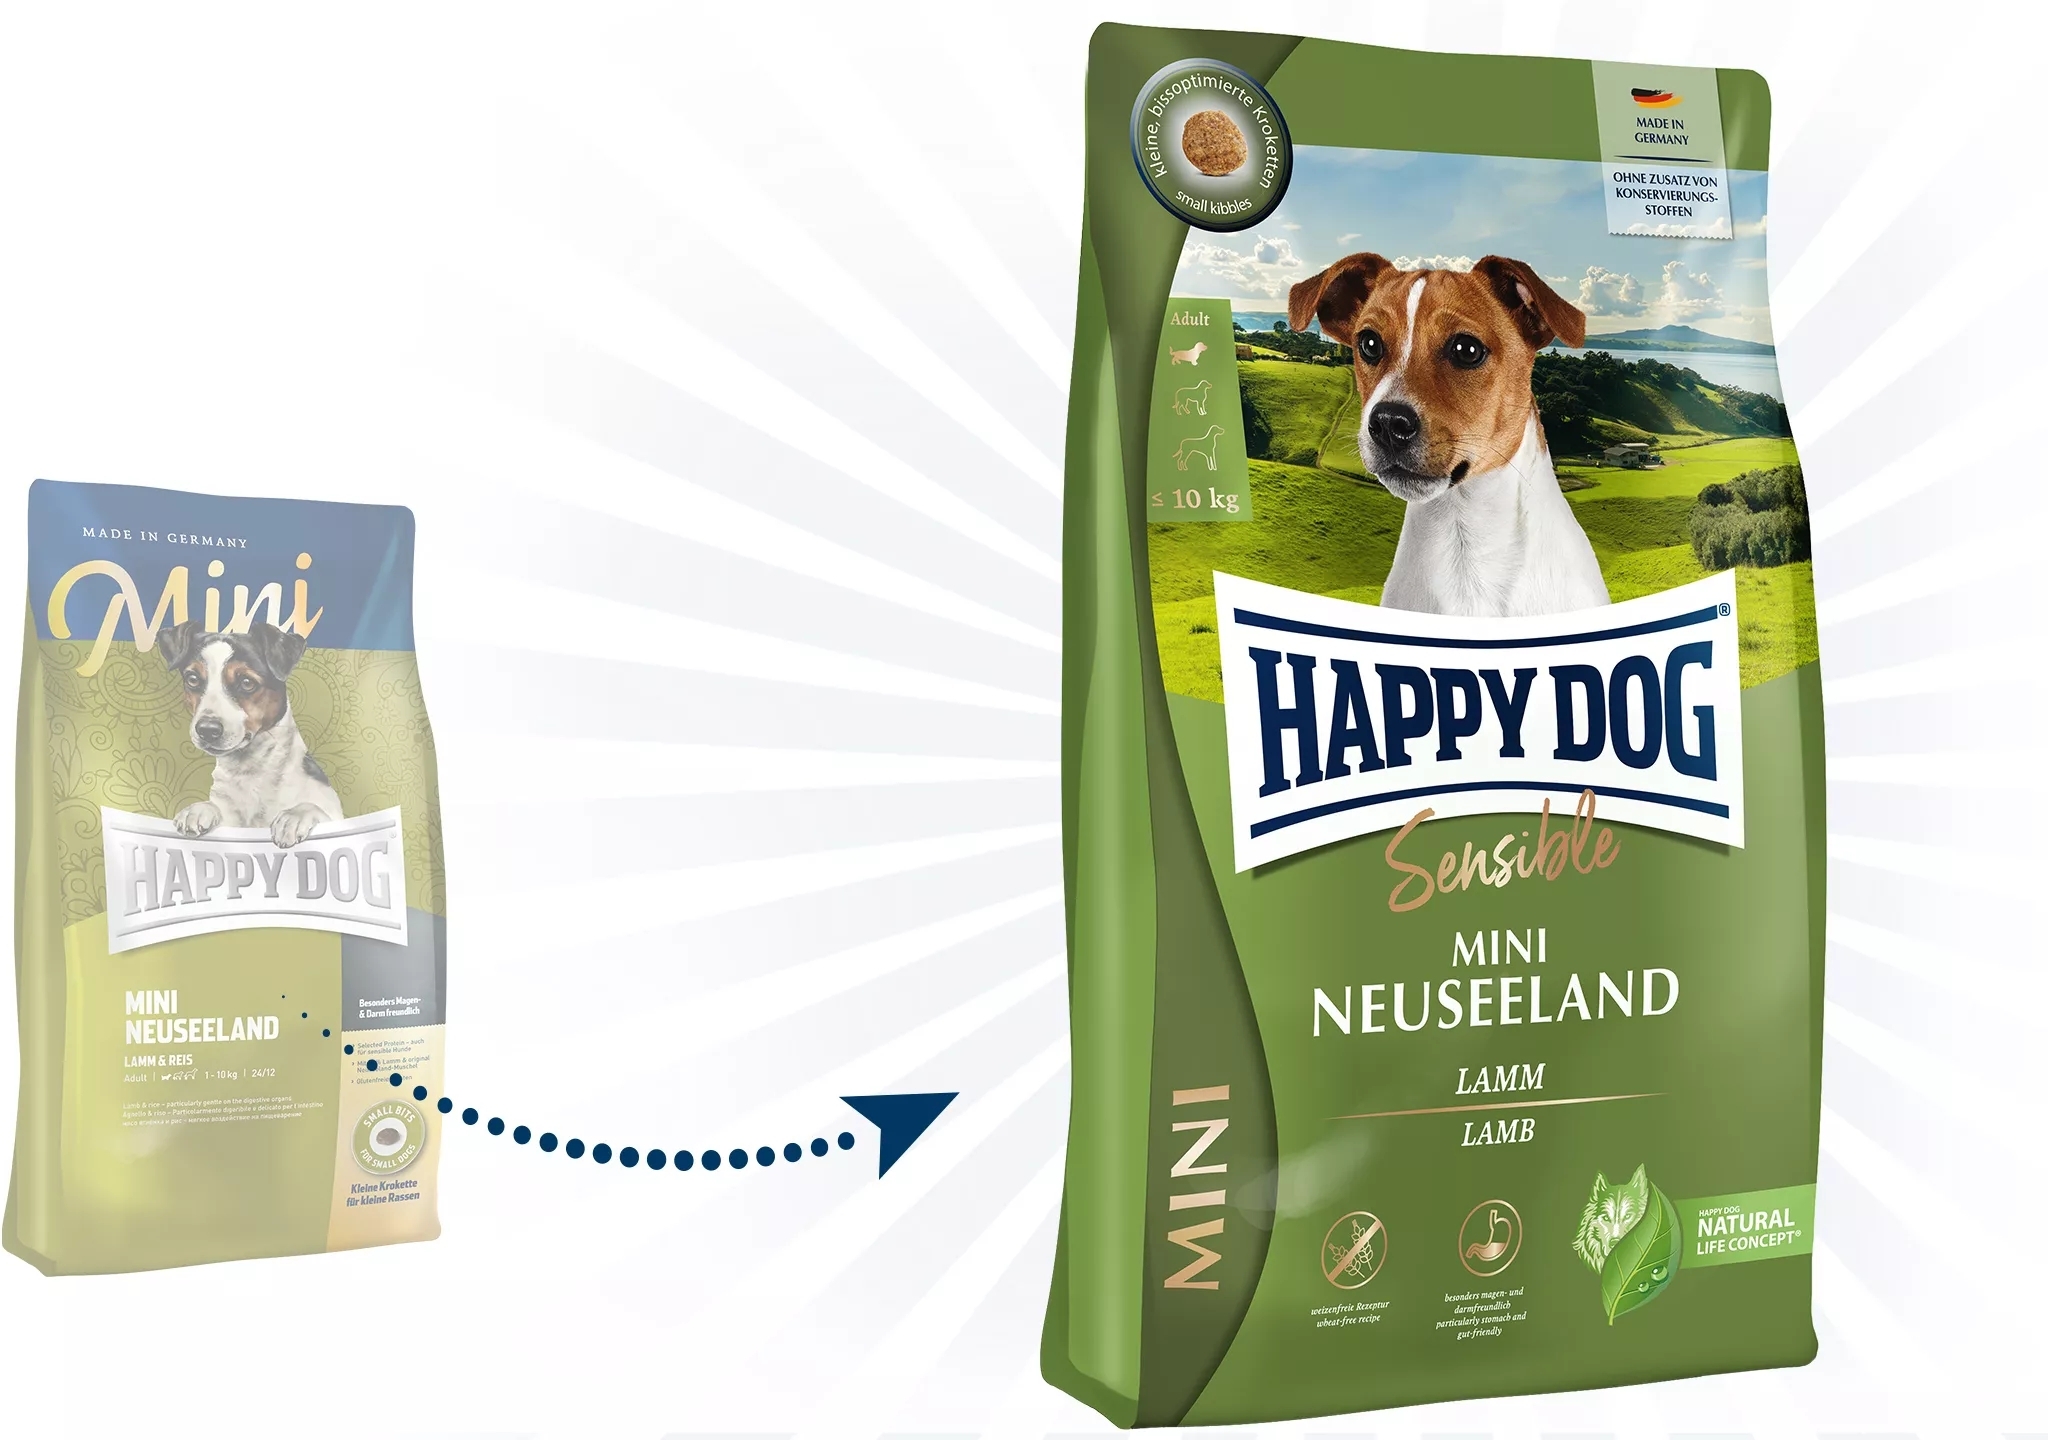 Happy Dog Sensible Mini Neuseeland - zoom